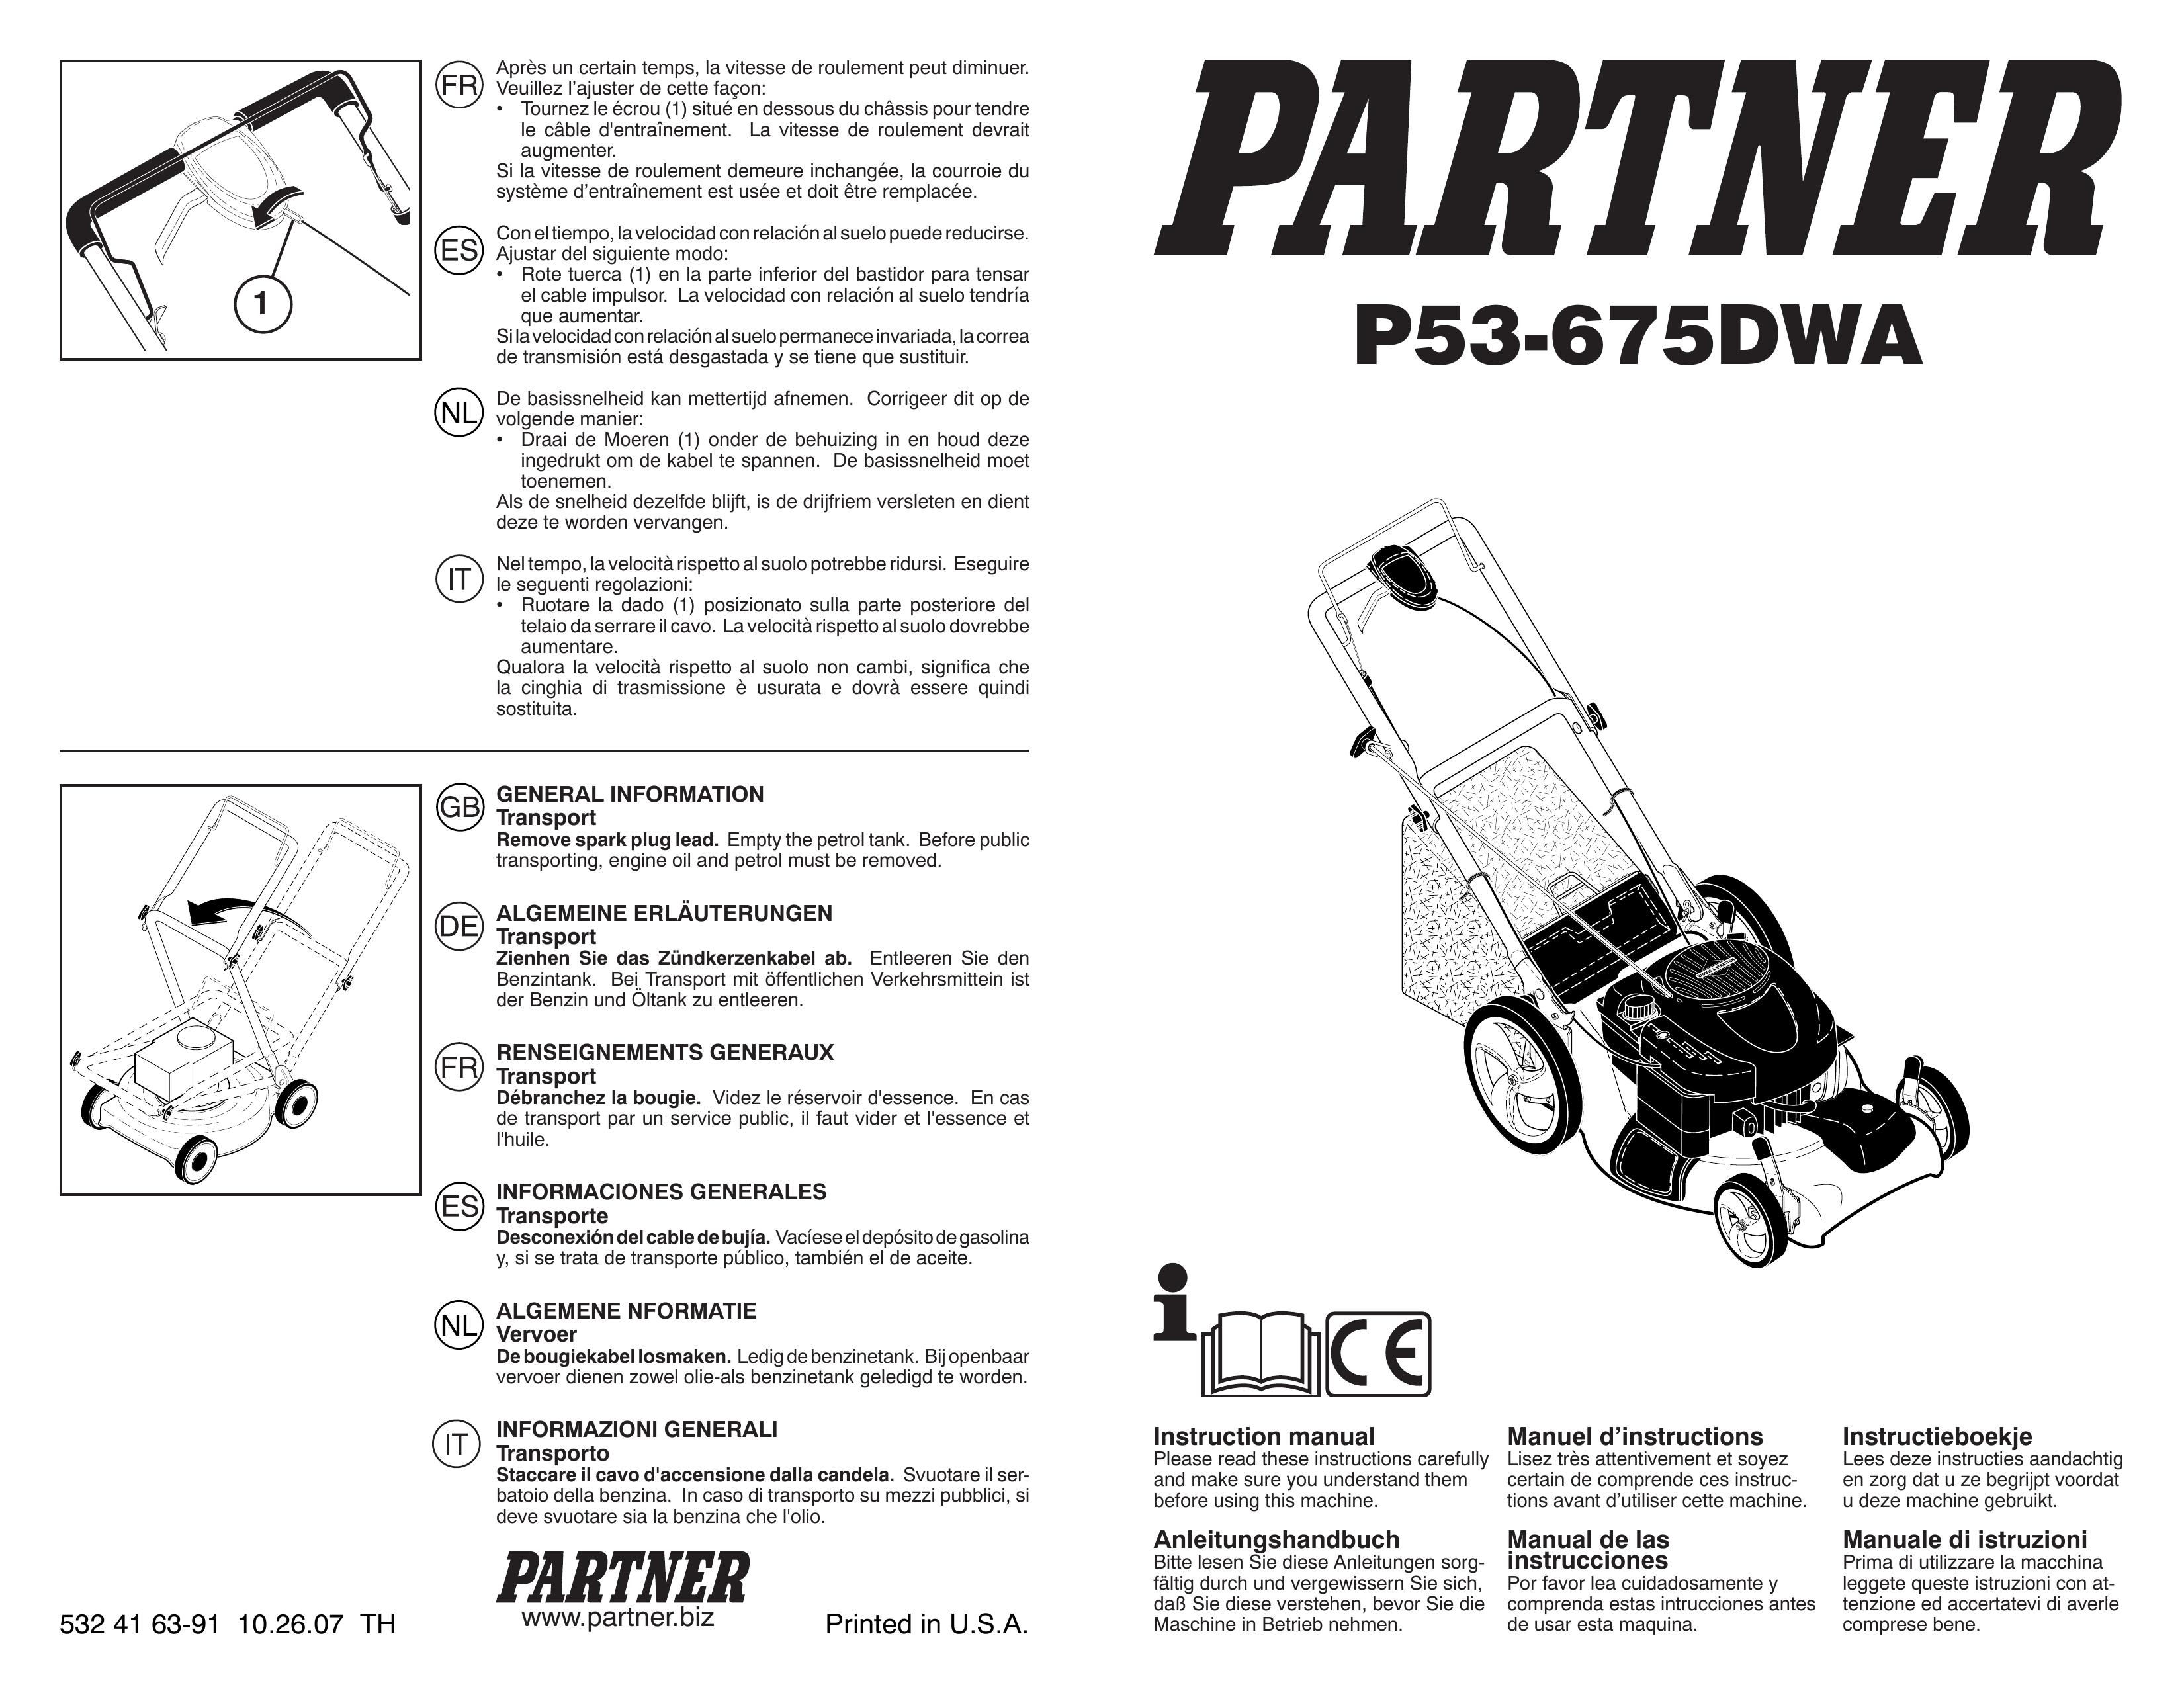 Partner Tech P53-675DWA Lawn Mower User Manual